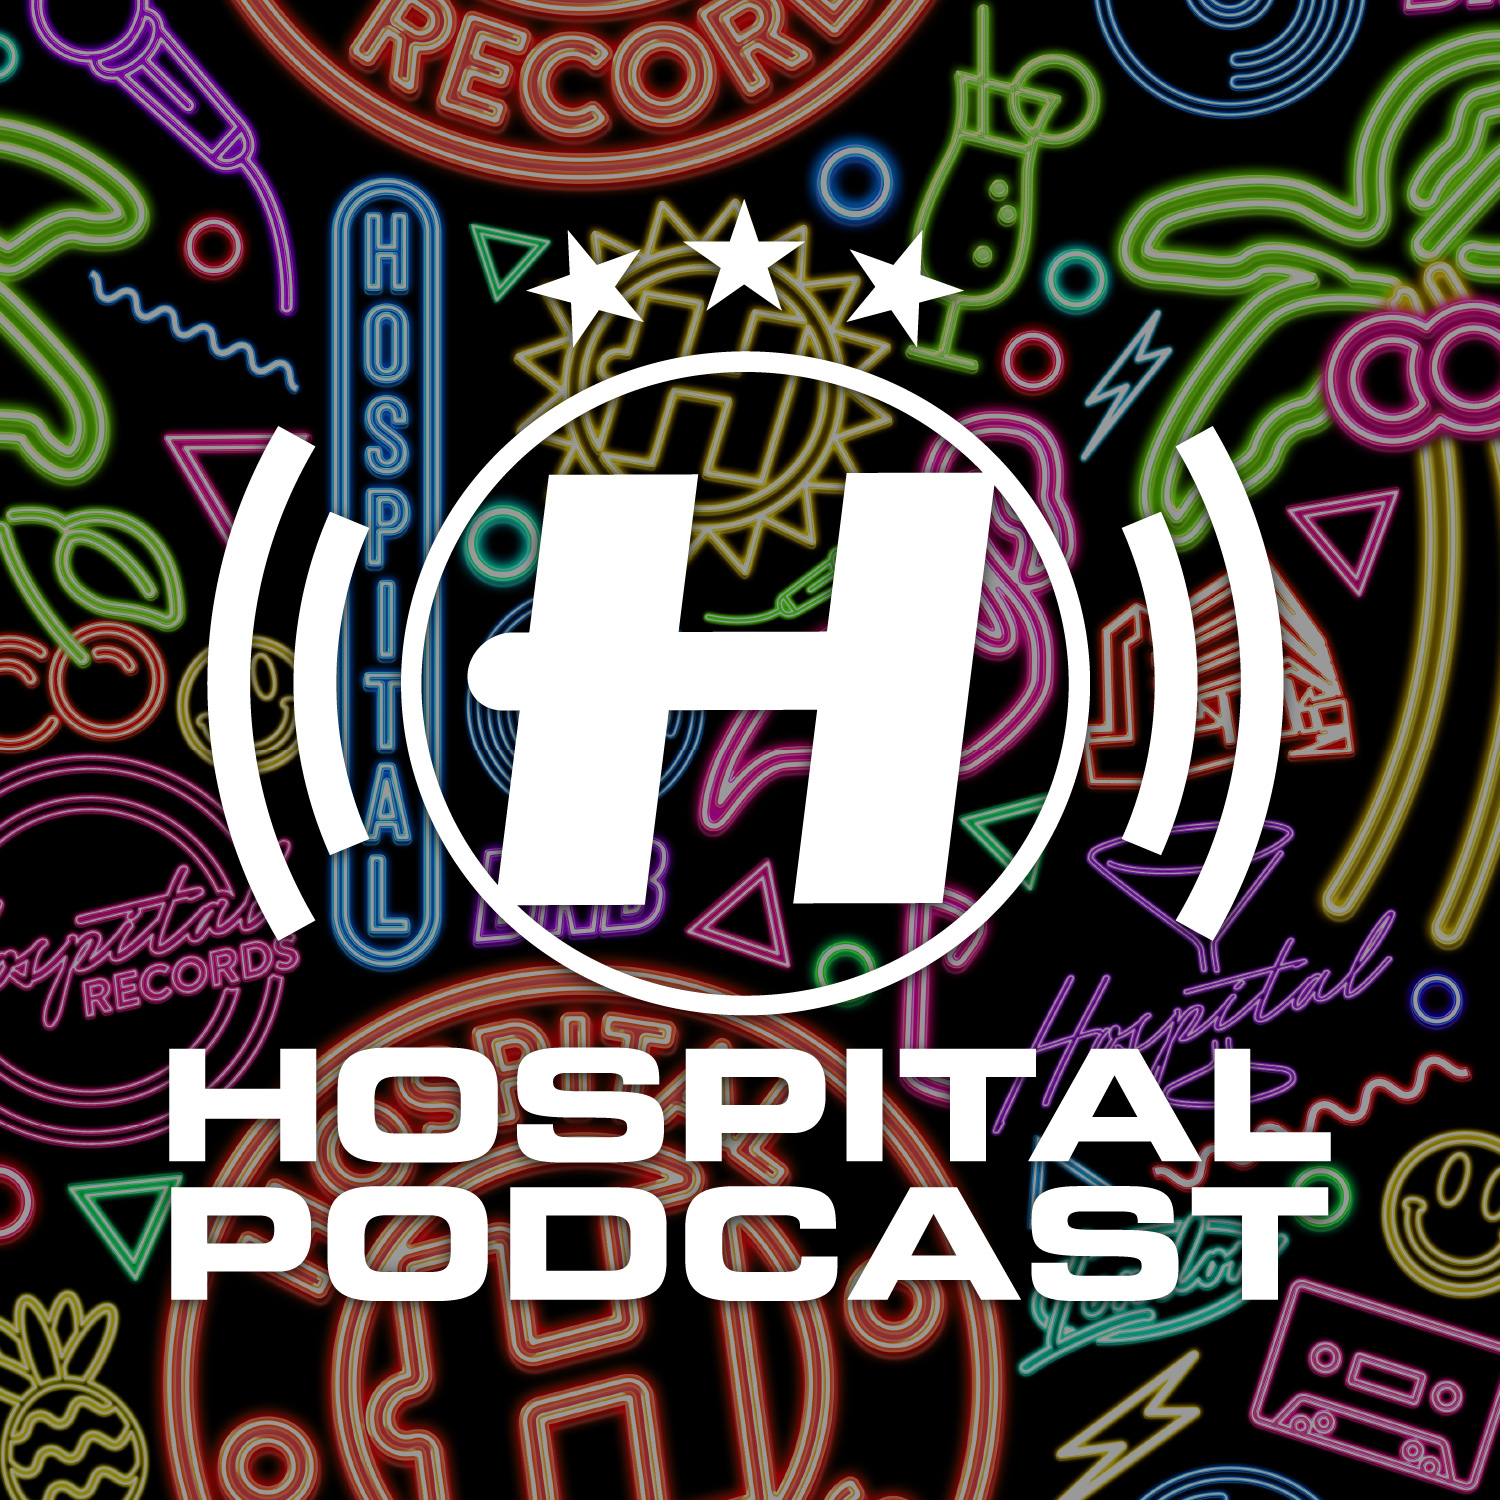 Hospital Podcast 424 with London Elektricity Artwork